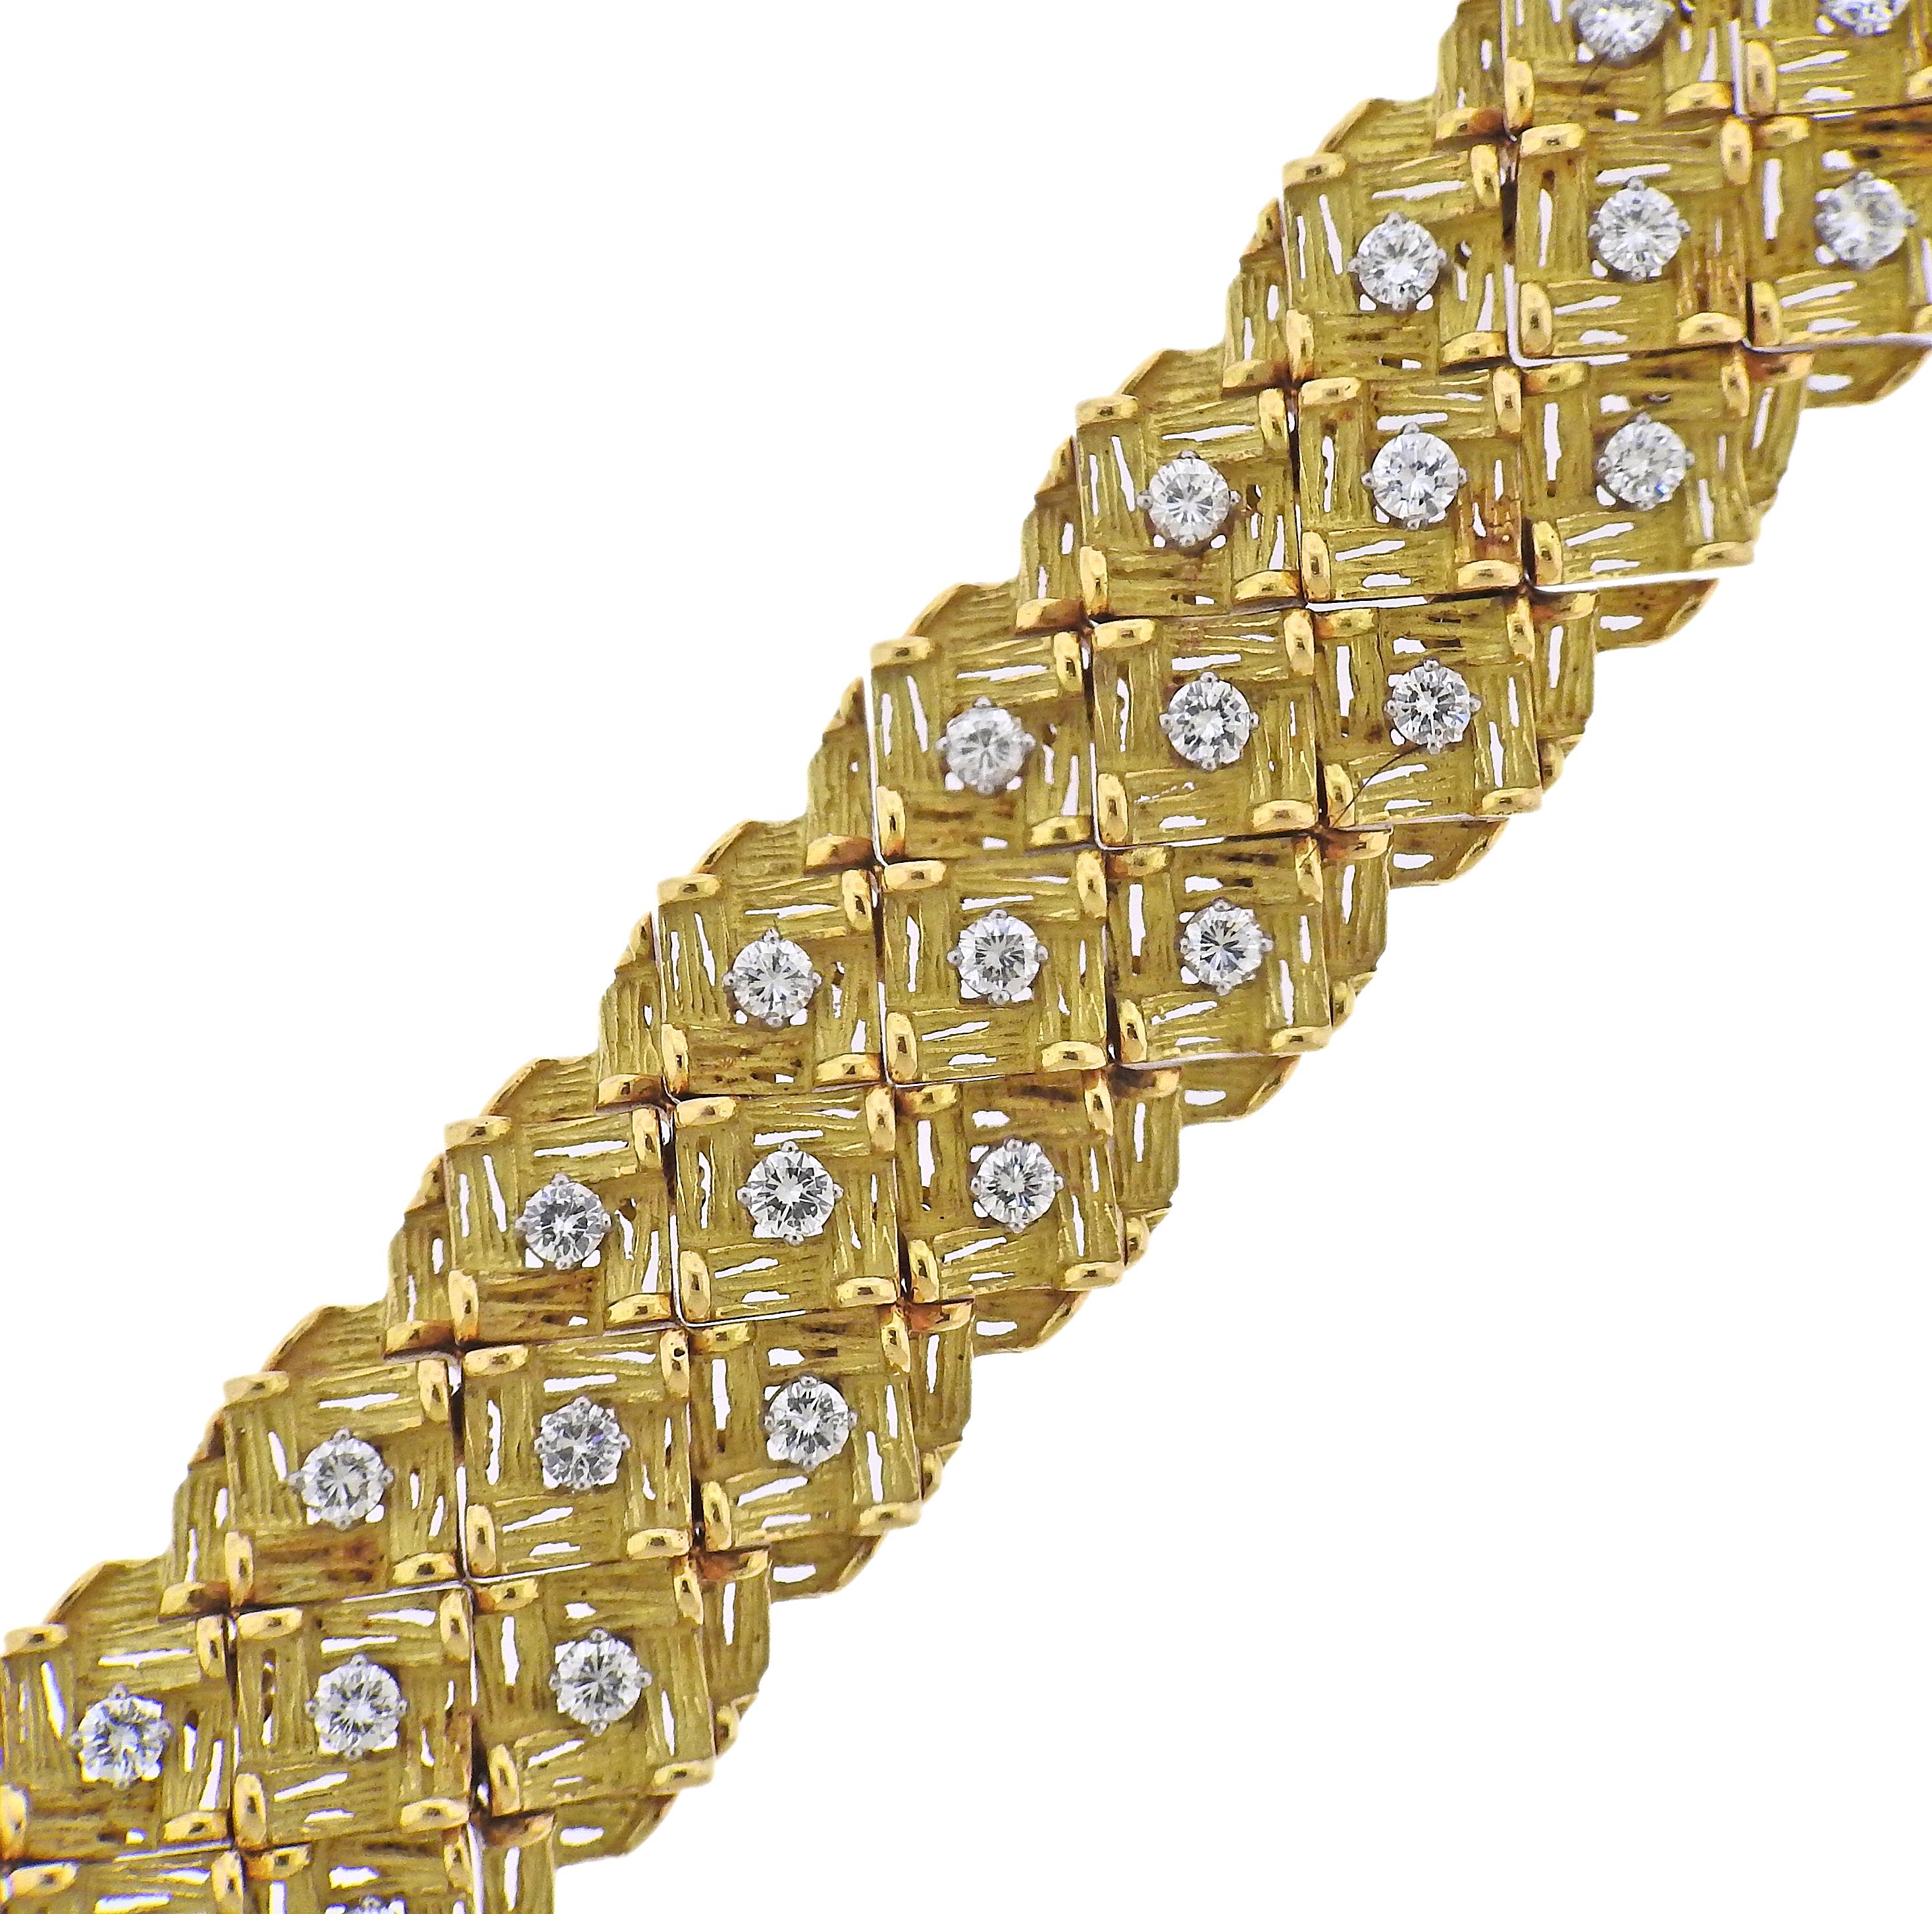 1960s vintage, French made 18k gold bracelet, set with approx. 6-6.50ctw H/Si1 diamonds. Bracelet measures 7.25